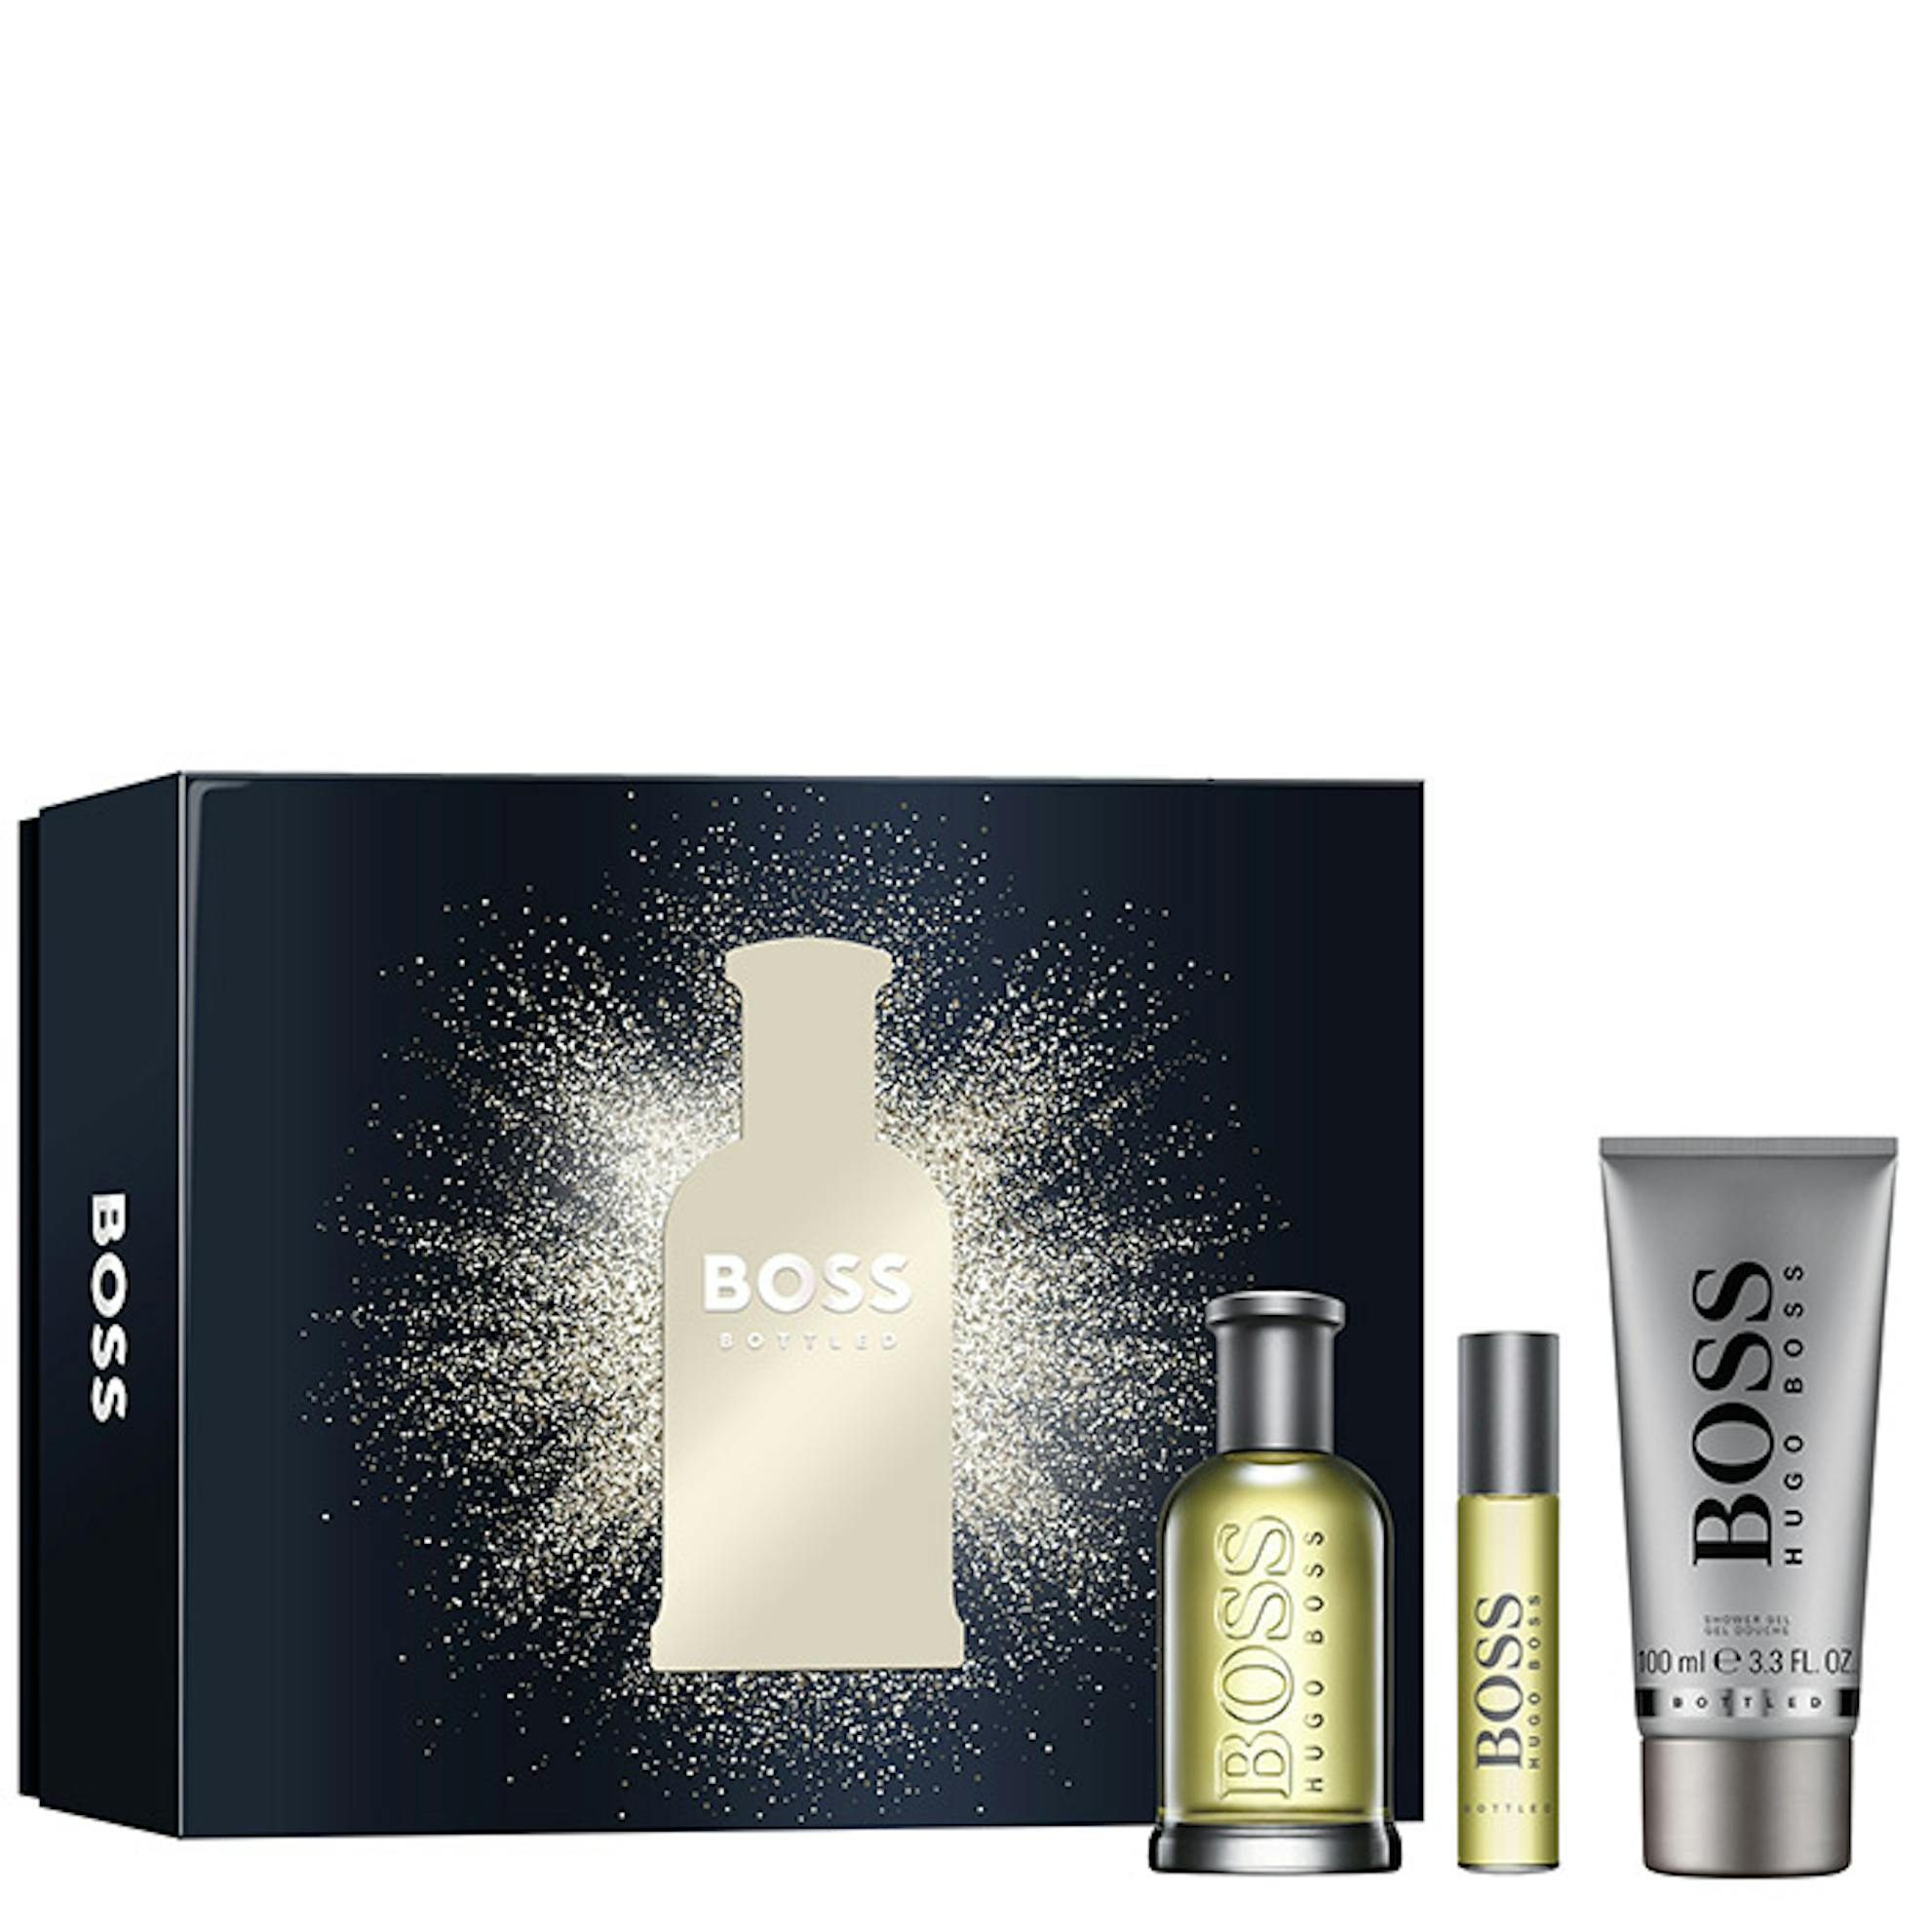 Hugo Boss Fragrance Bottled Elixir Parfum - Eau de toilette 